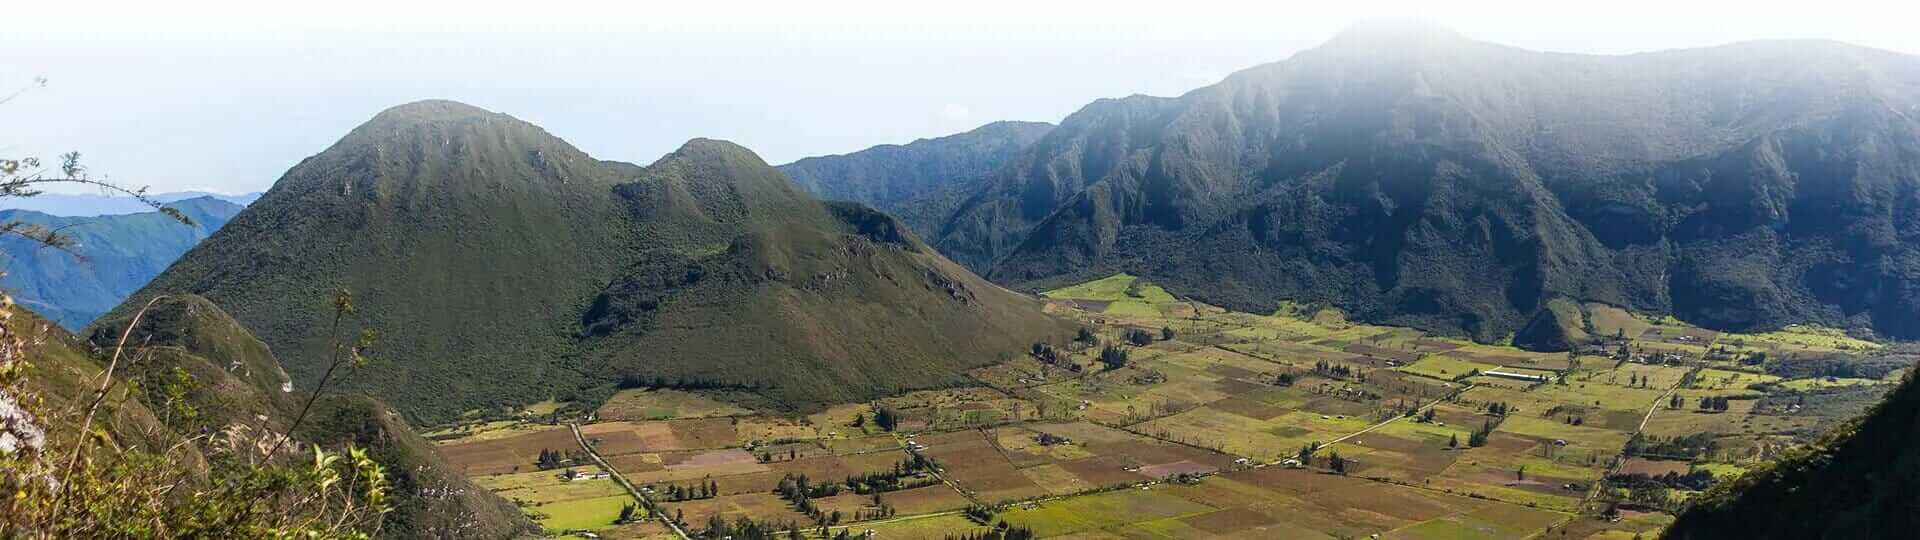 cráter del volcán pululahua